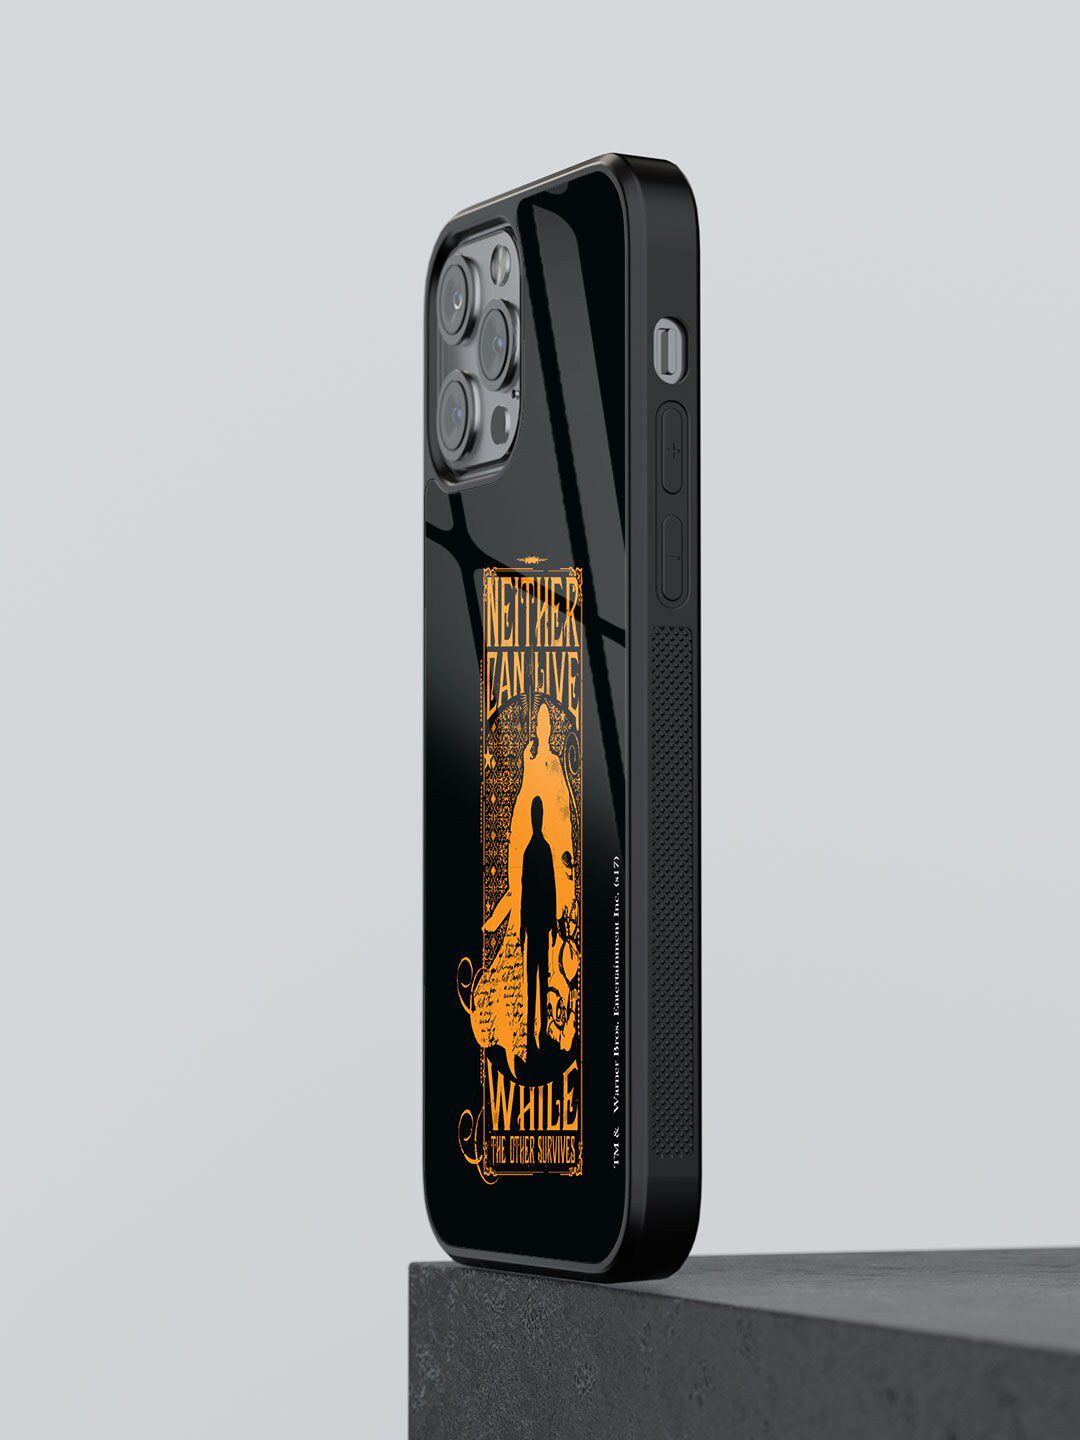 macmerise Black Harry Vs Voldemort  Printed iPhone 12 Pro Back Cover Price in India